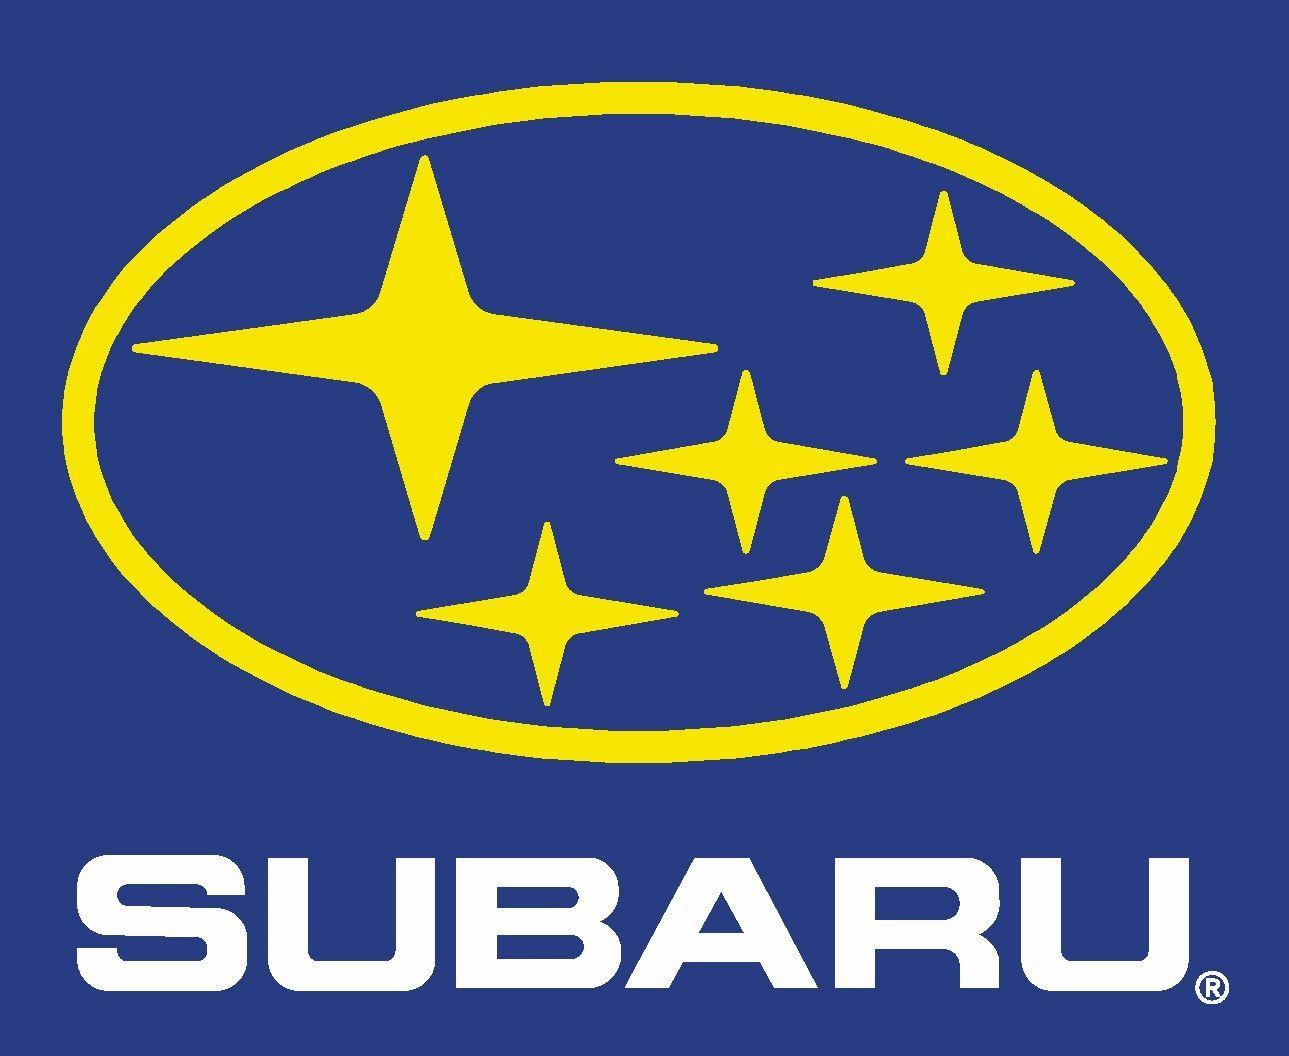 Subaru Logo - Did you know that the Subaru logo represents the Pleiades star